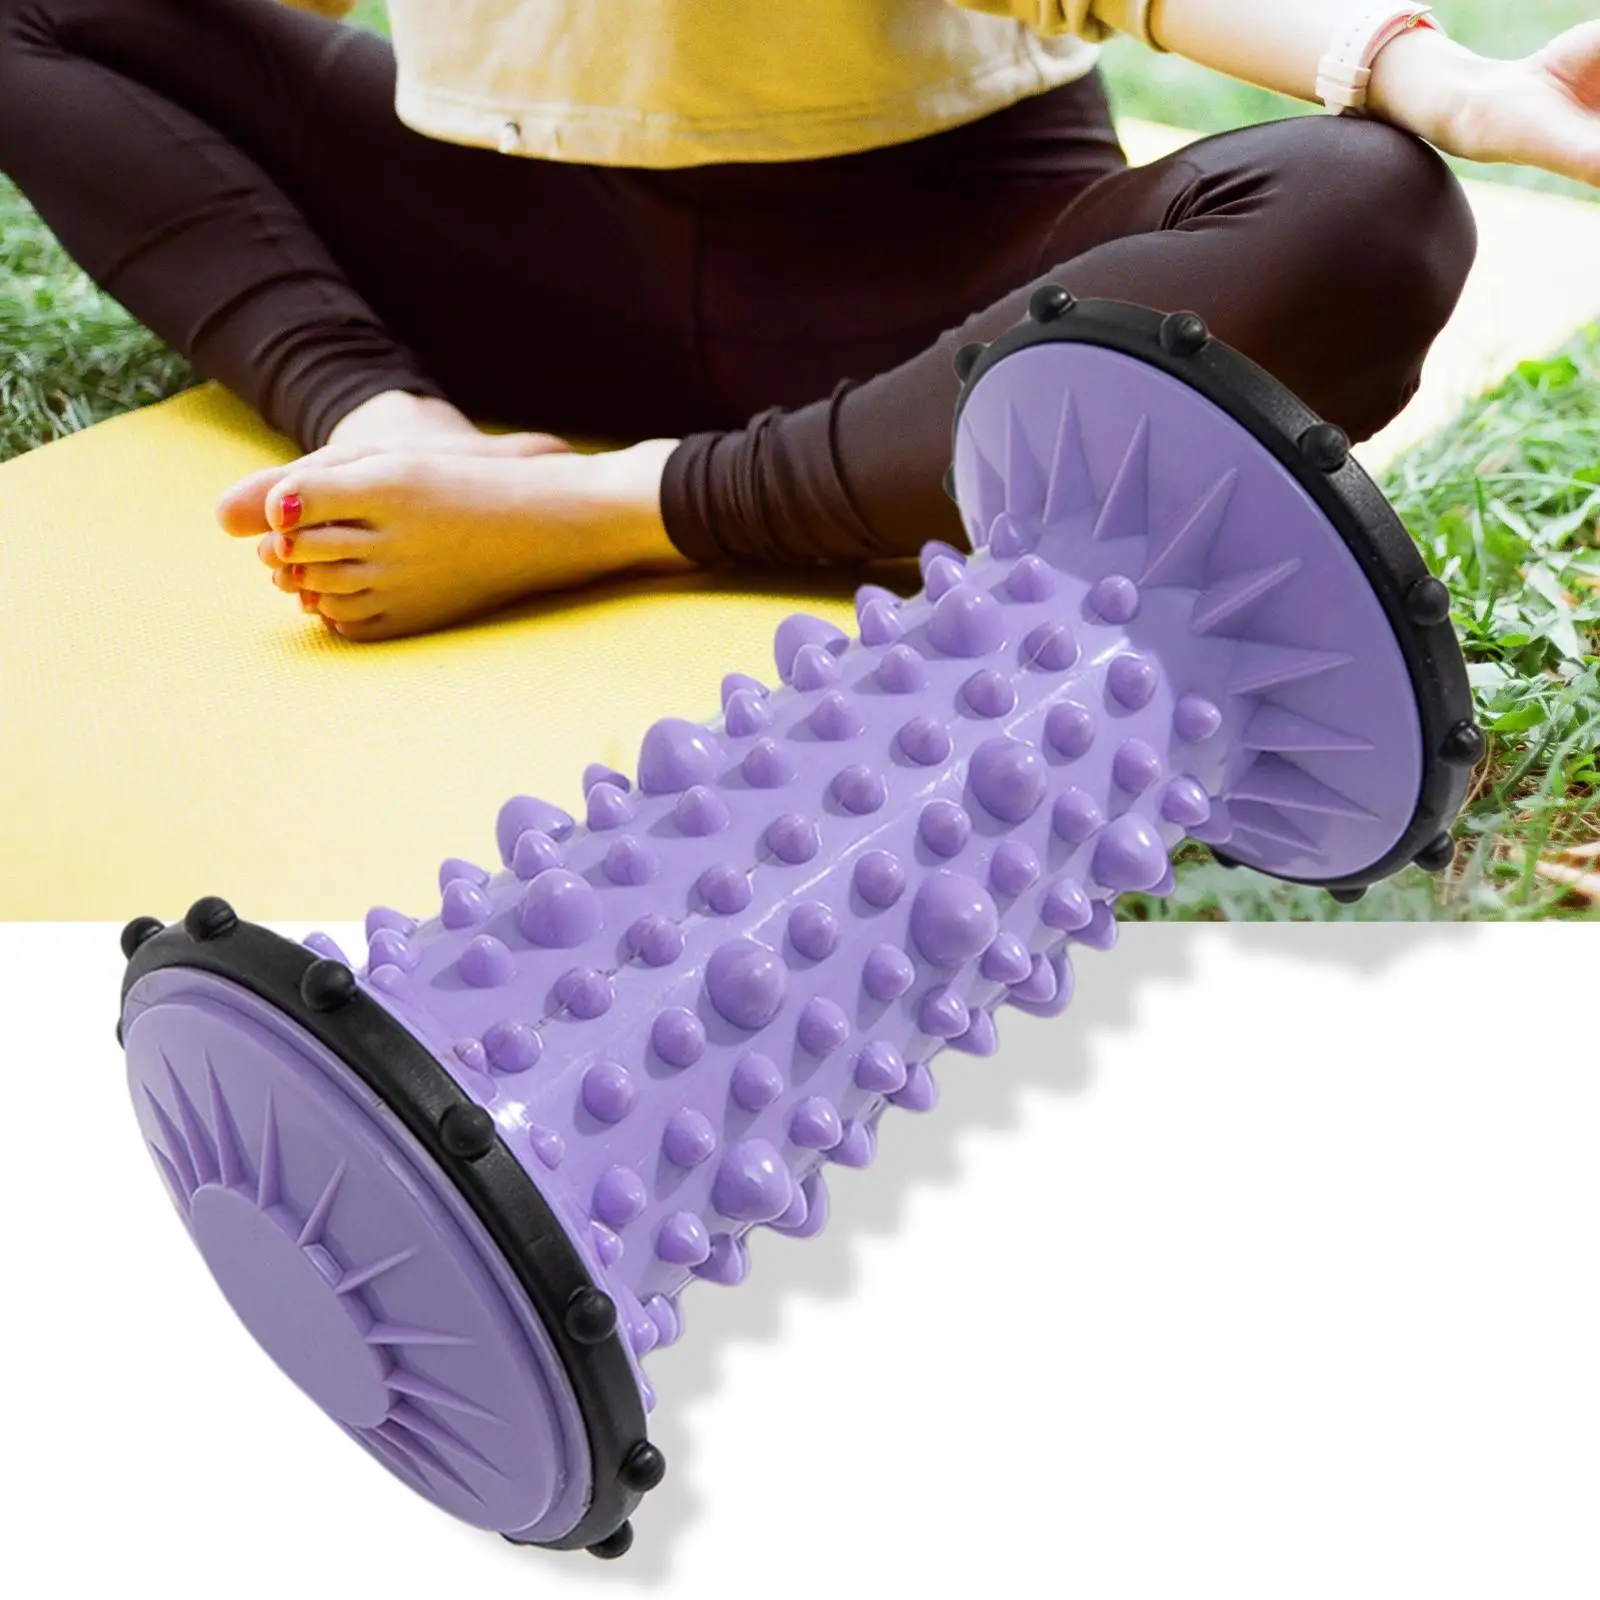 Foot Roller, Portable Muscle Roller for Women Men, Multifunctional Foot Massage